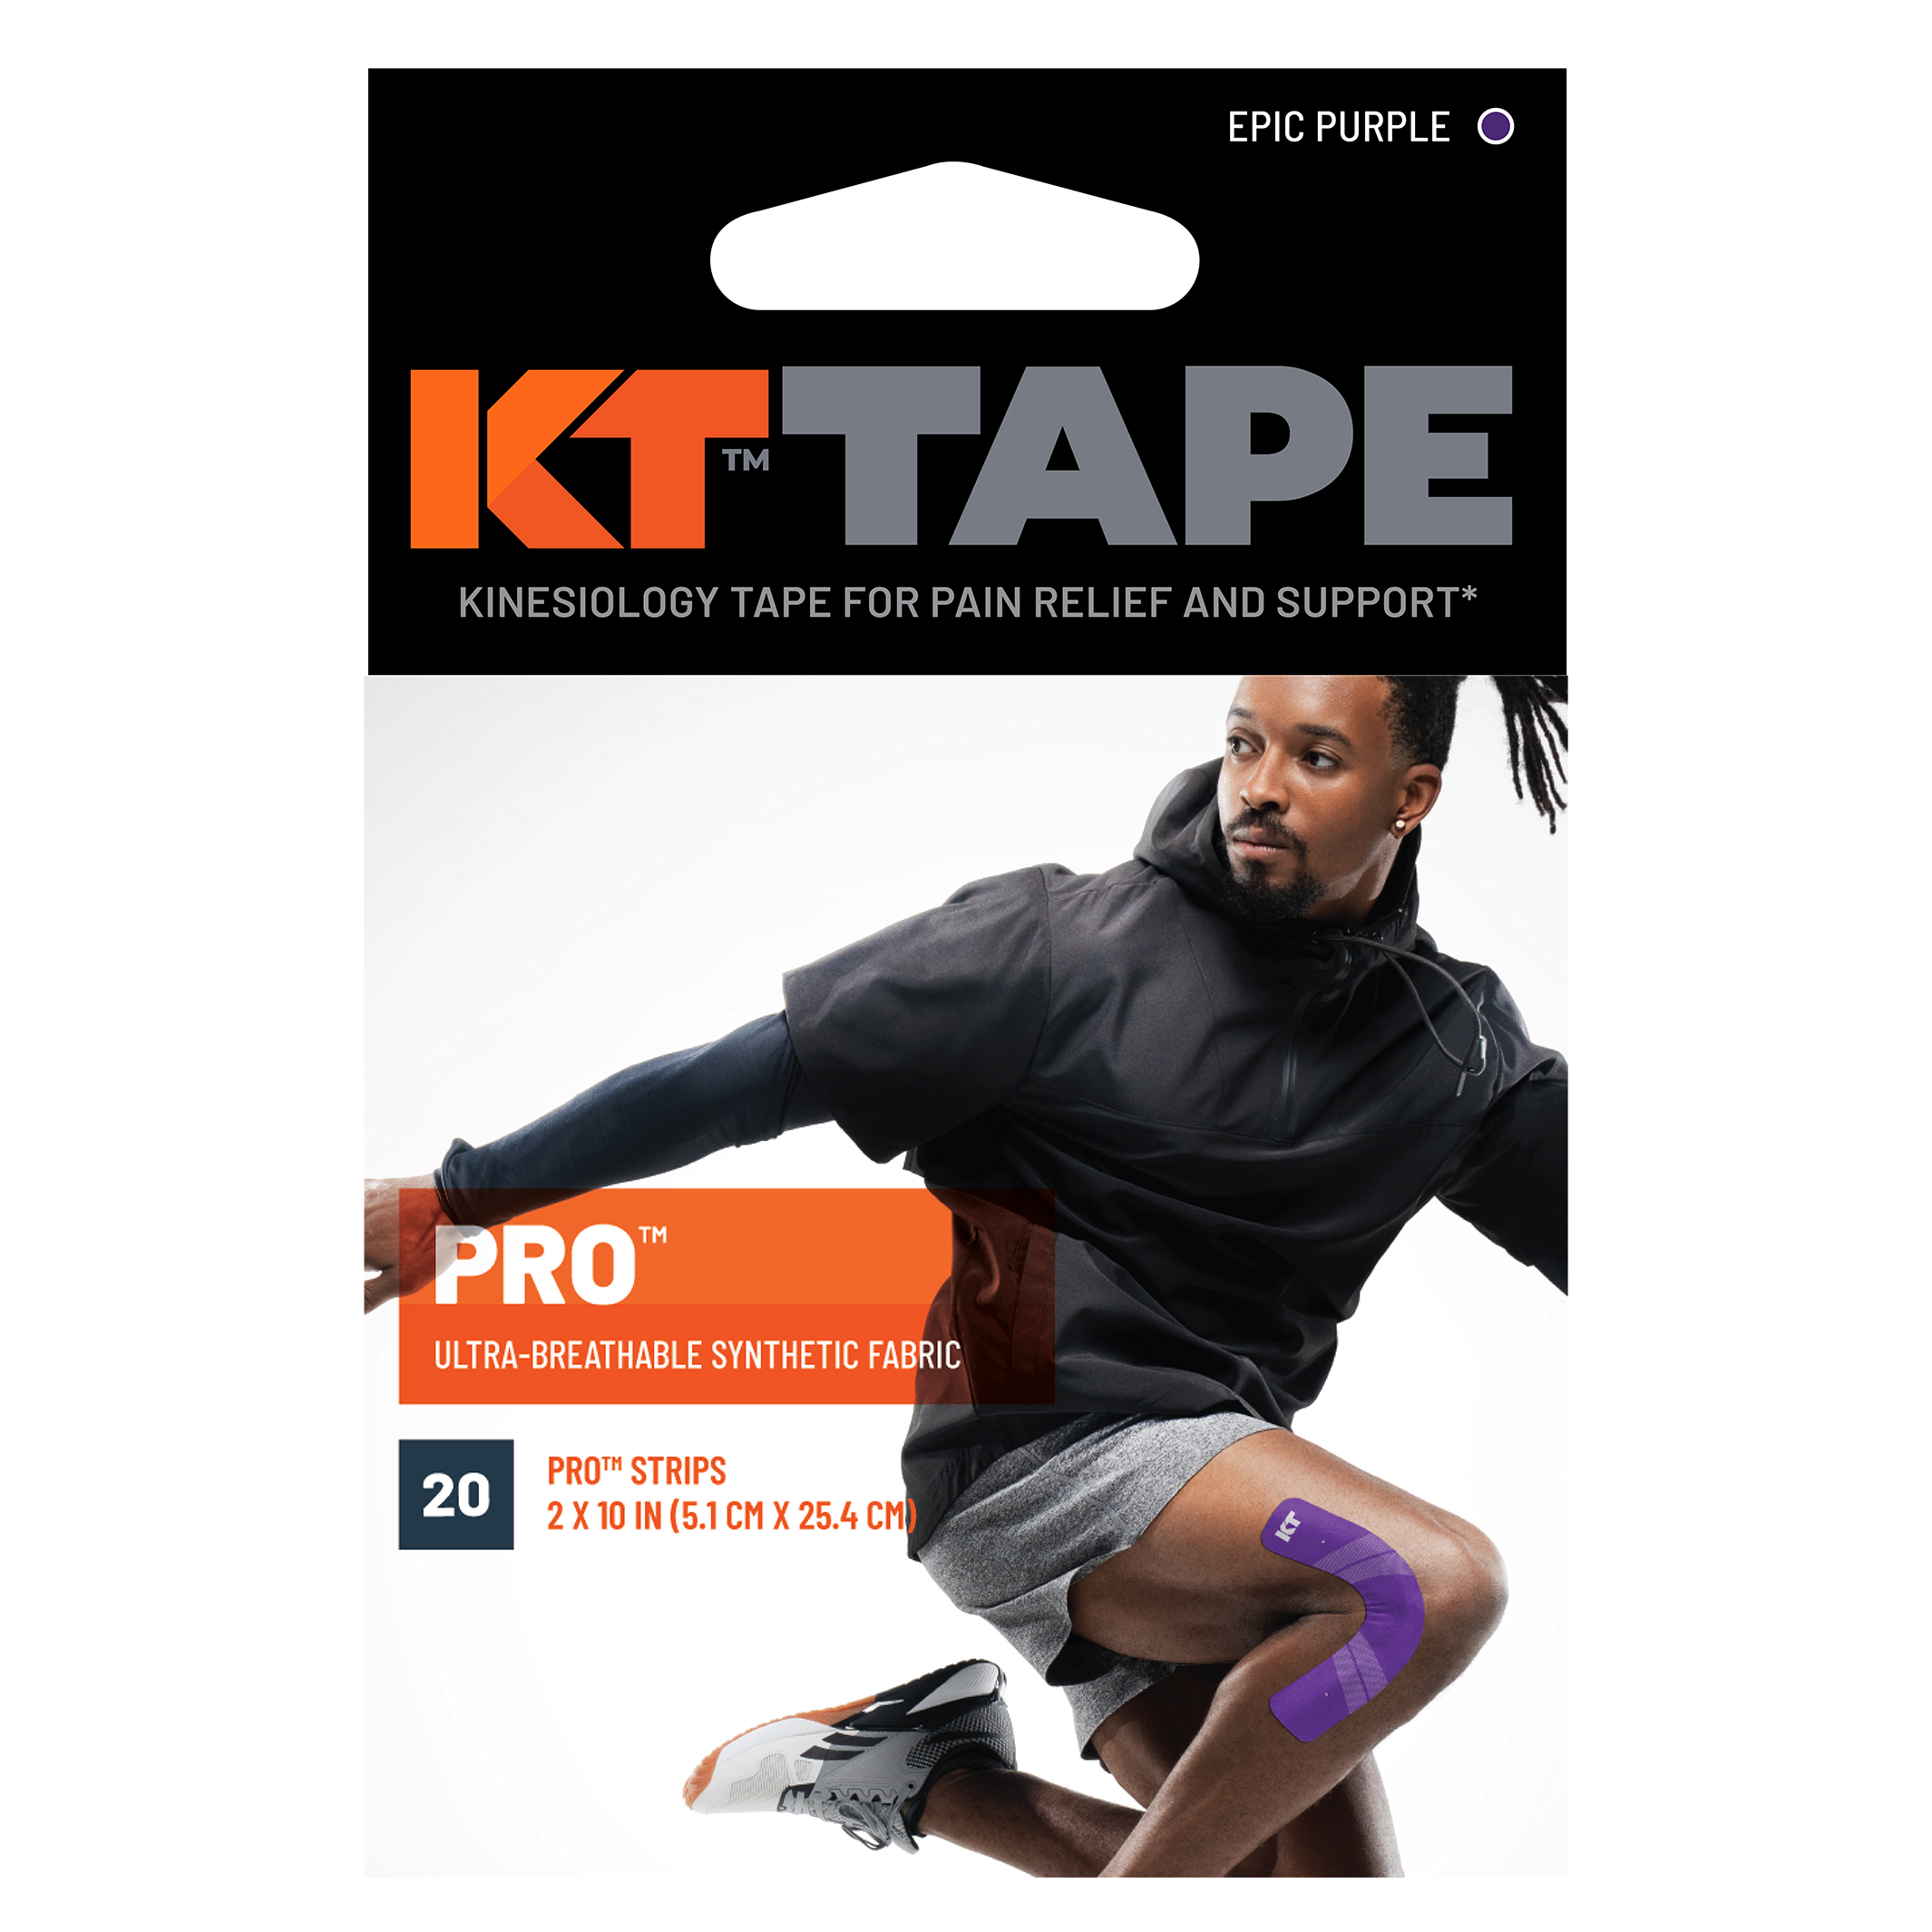 KT Tape Pro packaging#color_epic-purple